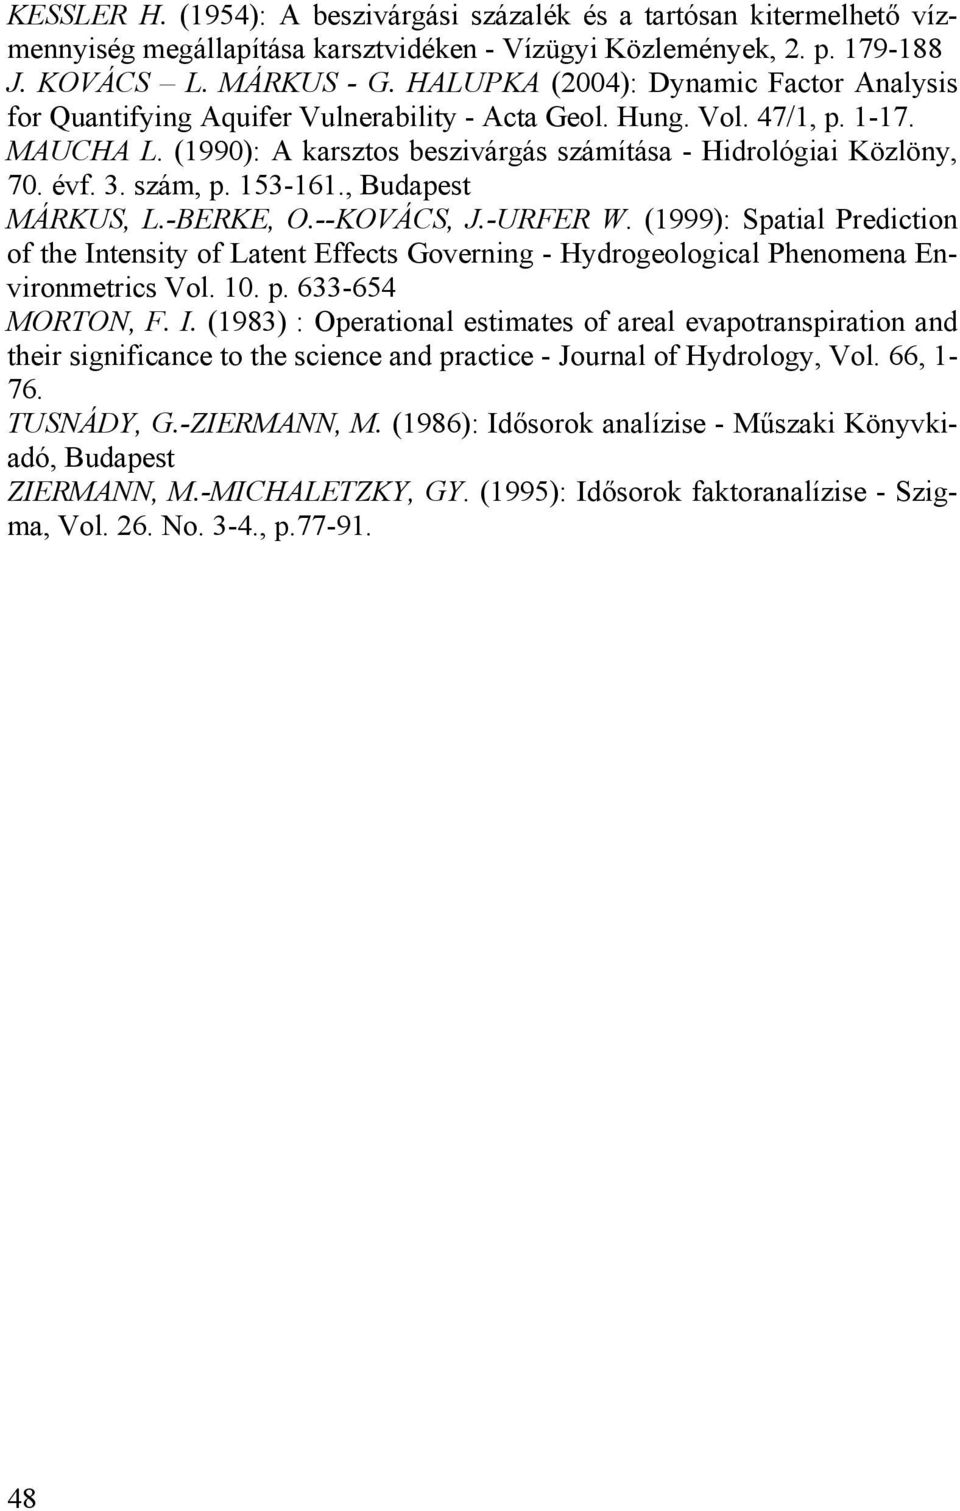 szám, p. 153-161., Budapest MÁRKUS, L.-BERKE, O.--KOVÁCS, J.-URFER W. (1999): Spatial Prediction of the Intensity of Latent Effects Governing - Hydrogeological Phenomena Environmetrics Vol. 1. p. 633-65 MORTON, F.